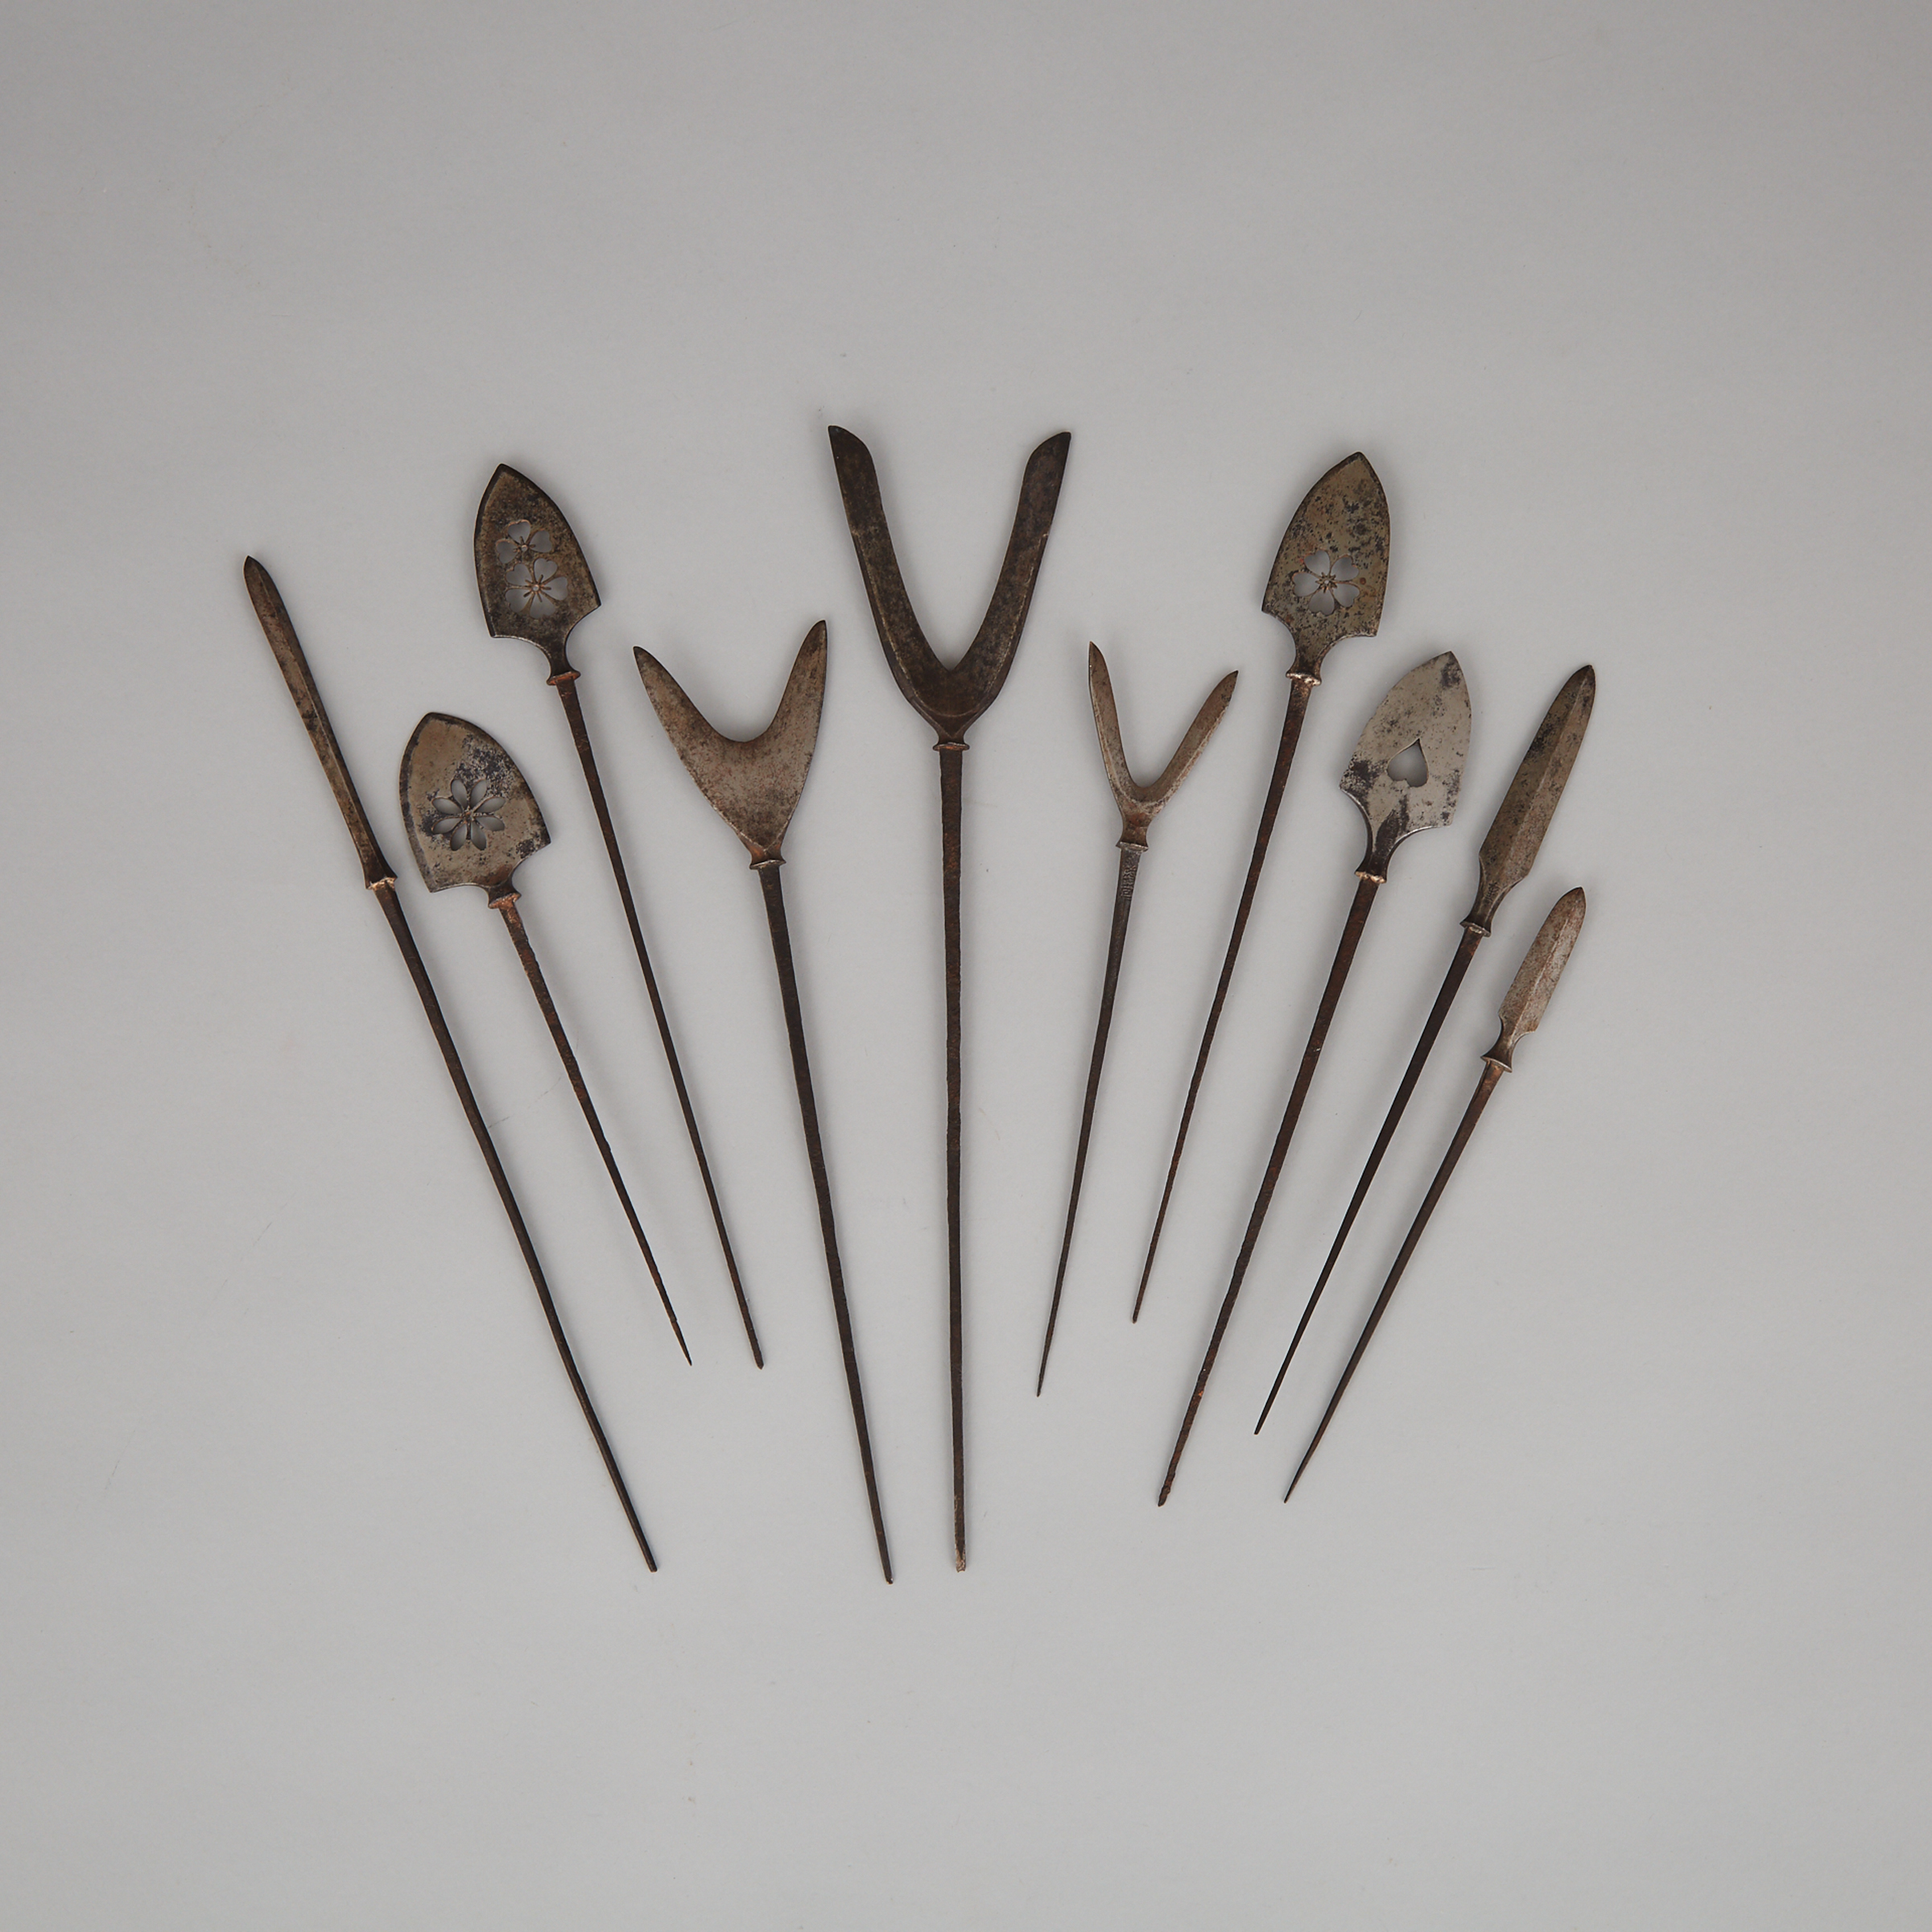 A Set of Ten Japanese Samurai Arrowheads (Yanone), Edo Period